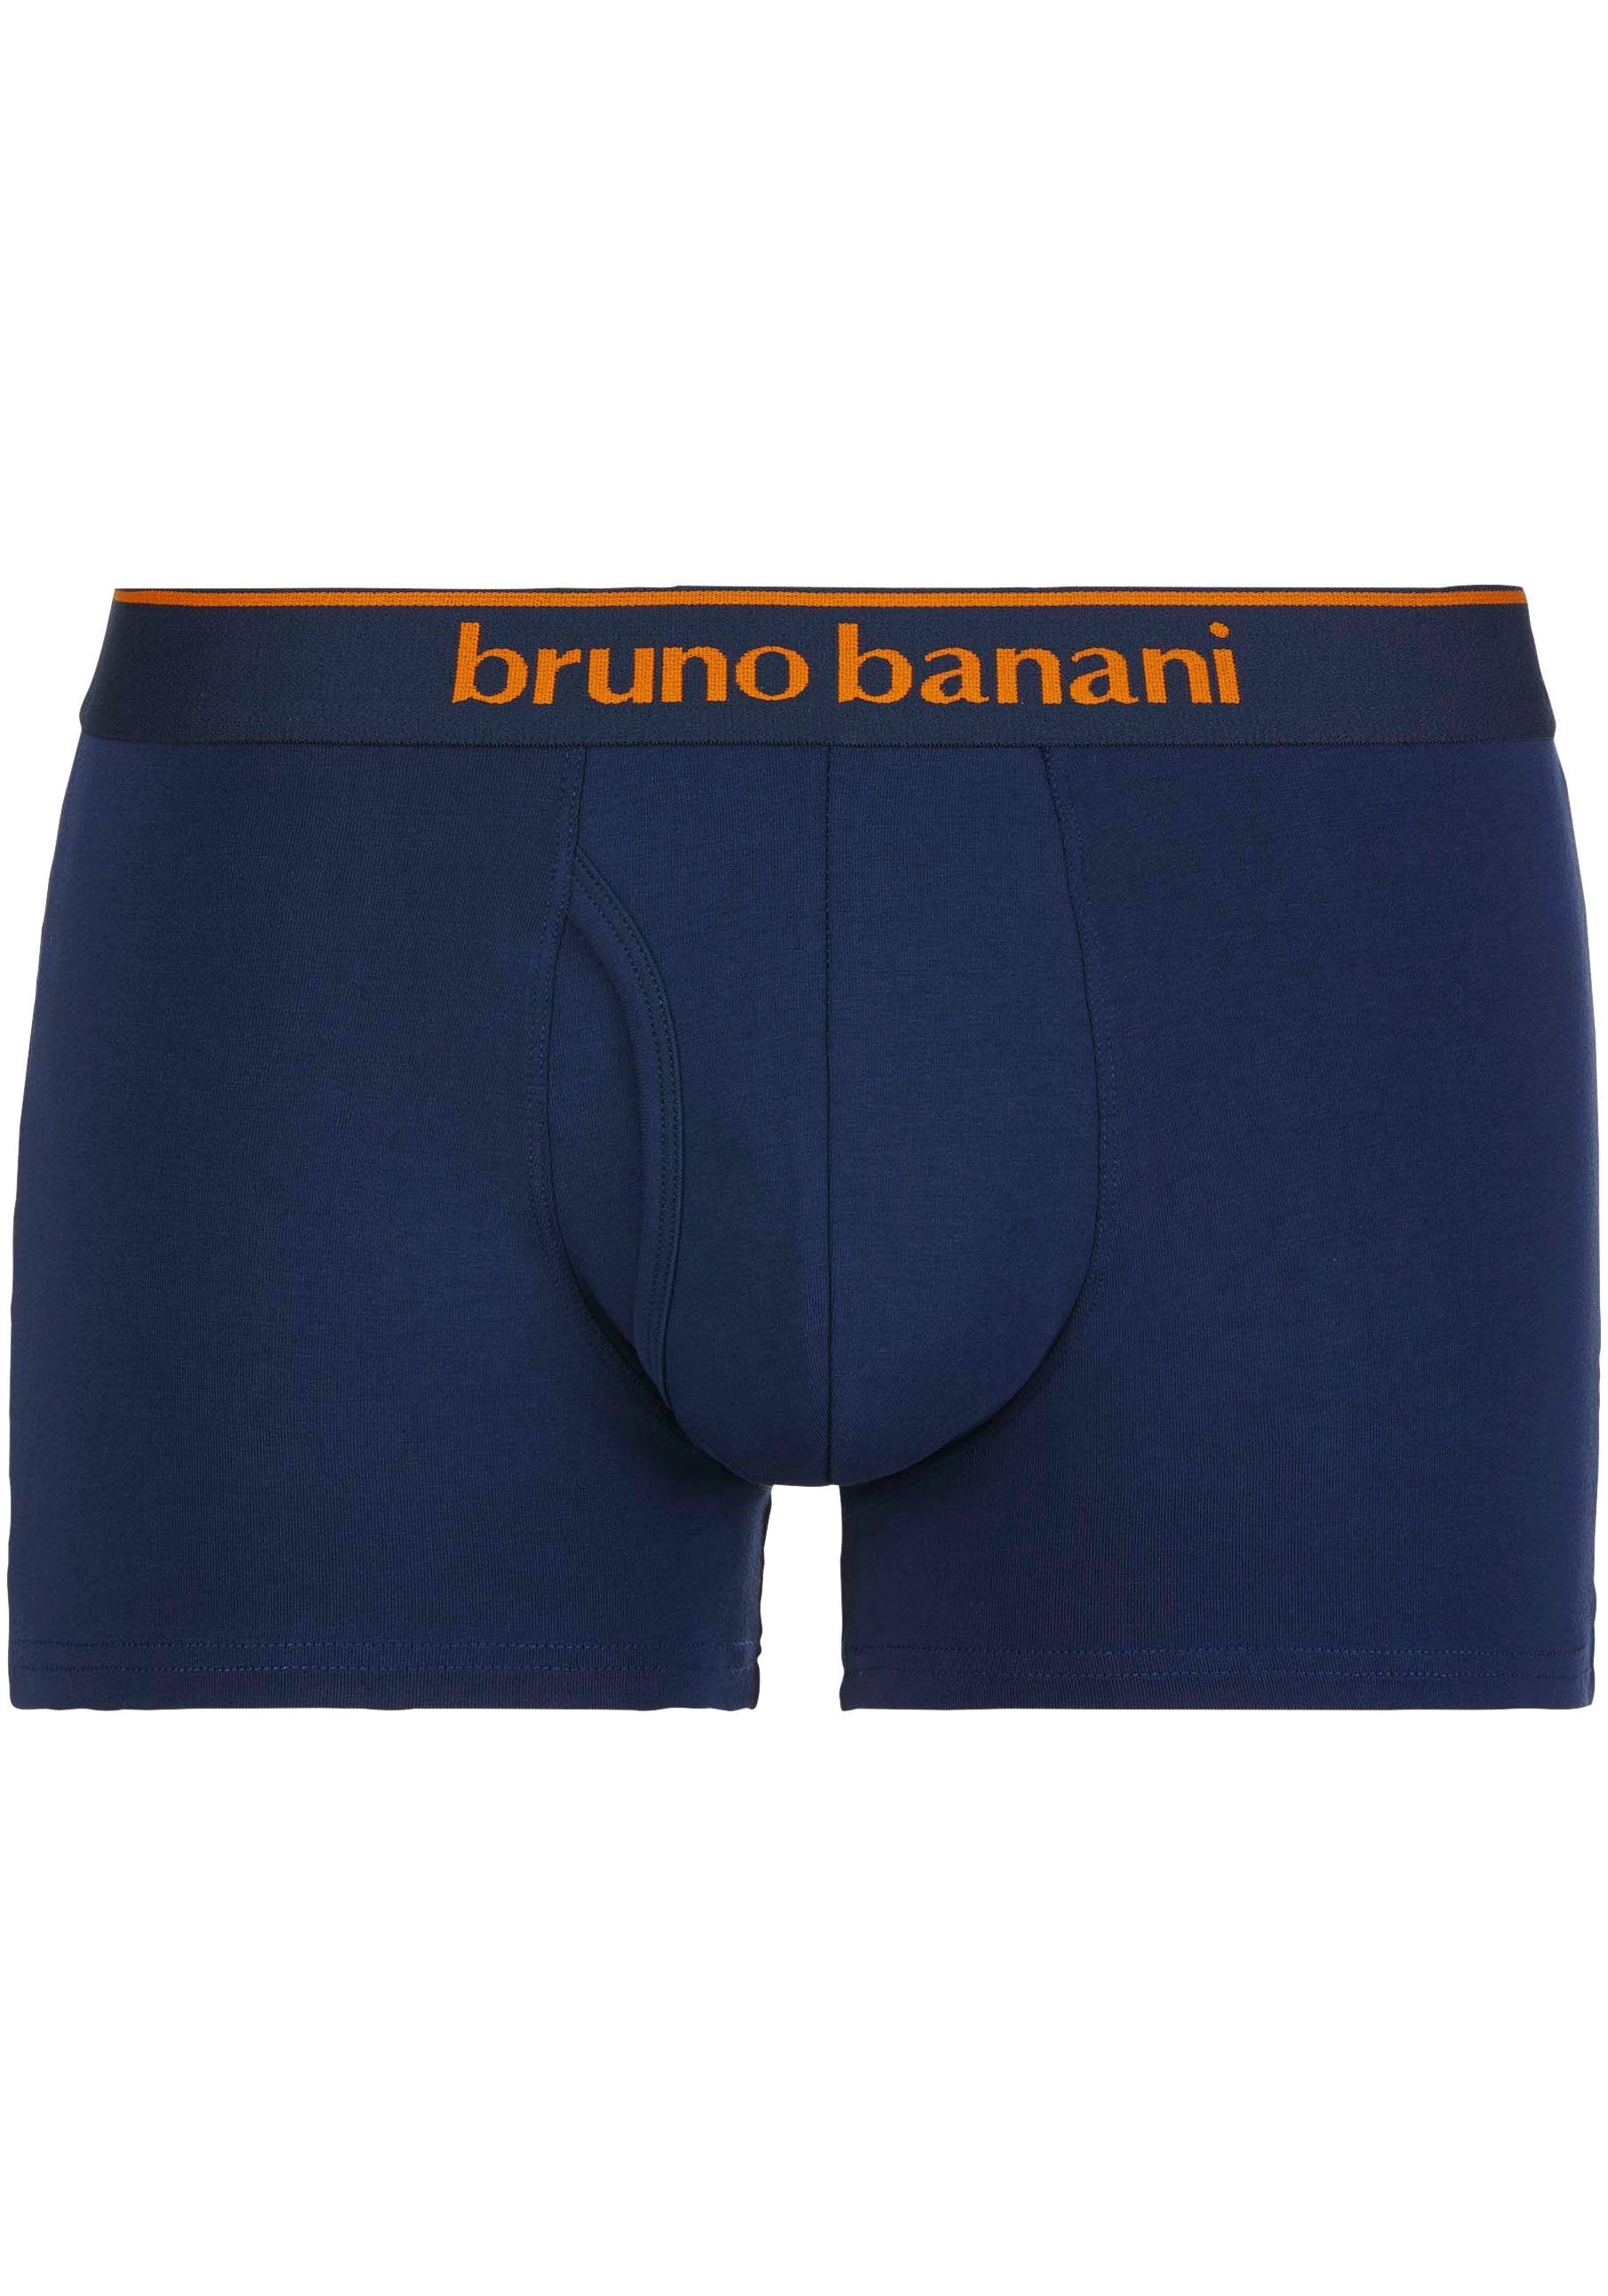 2Pack Kontrastfarbene Bruno Banani 2-St) Quick blau-schwarz (Packung, Boxershorts Short Access Details